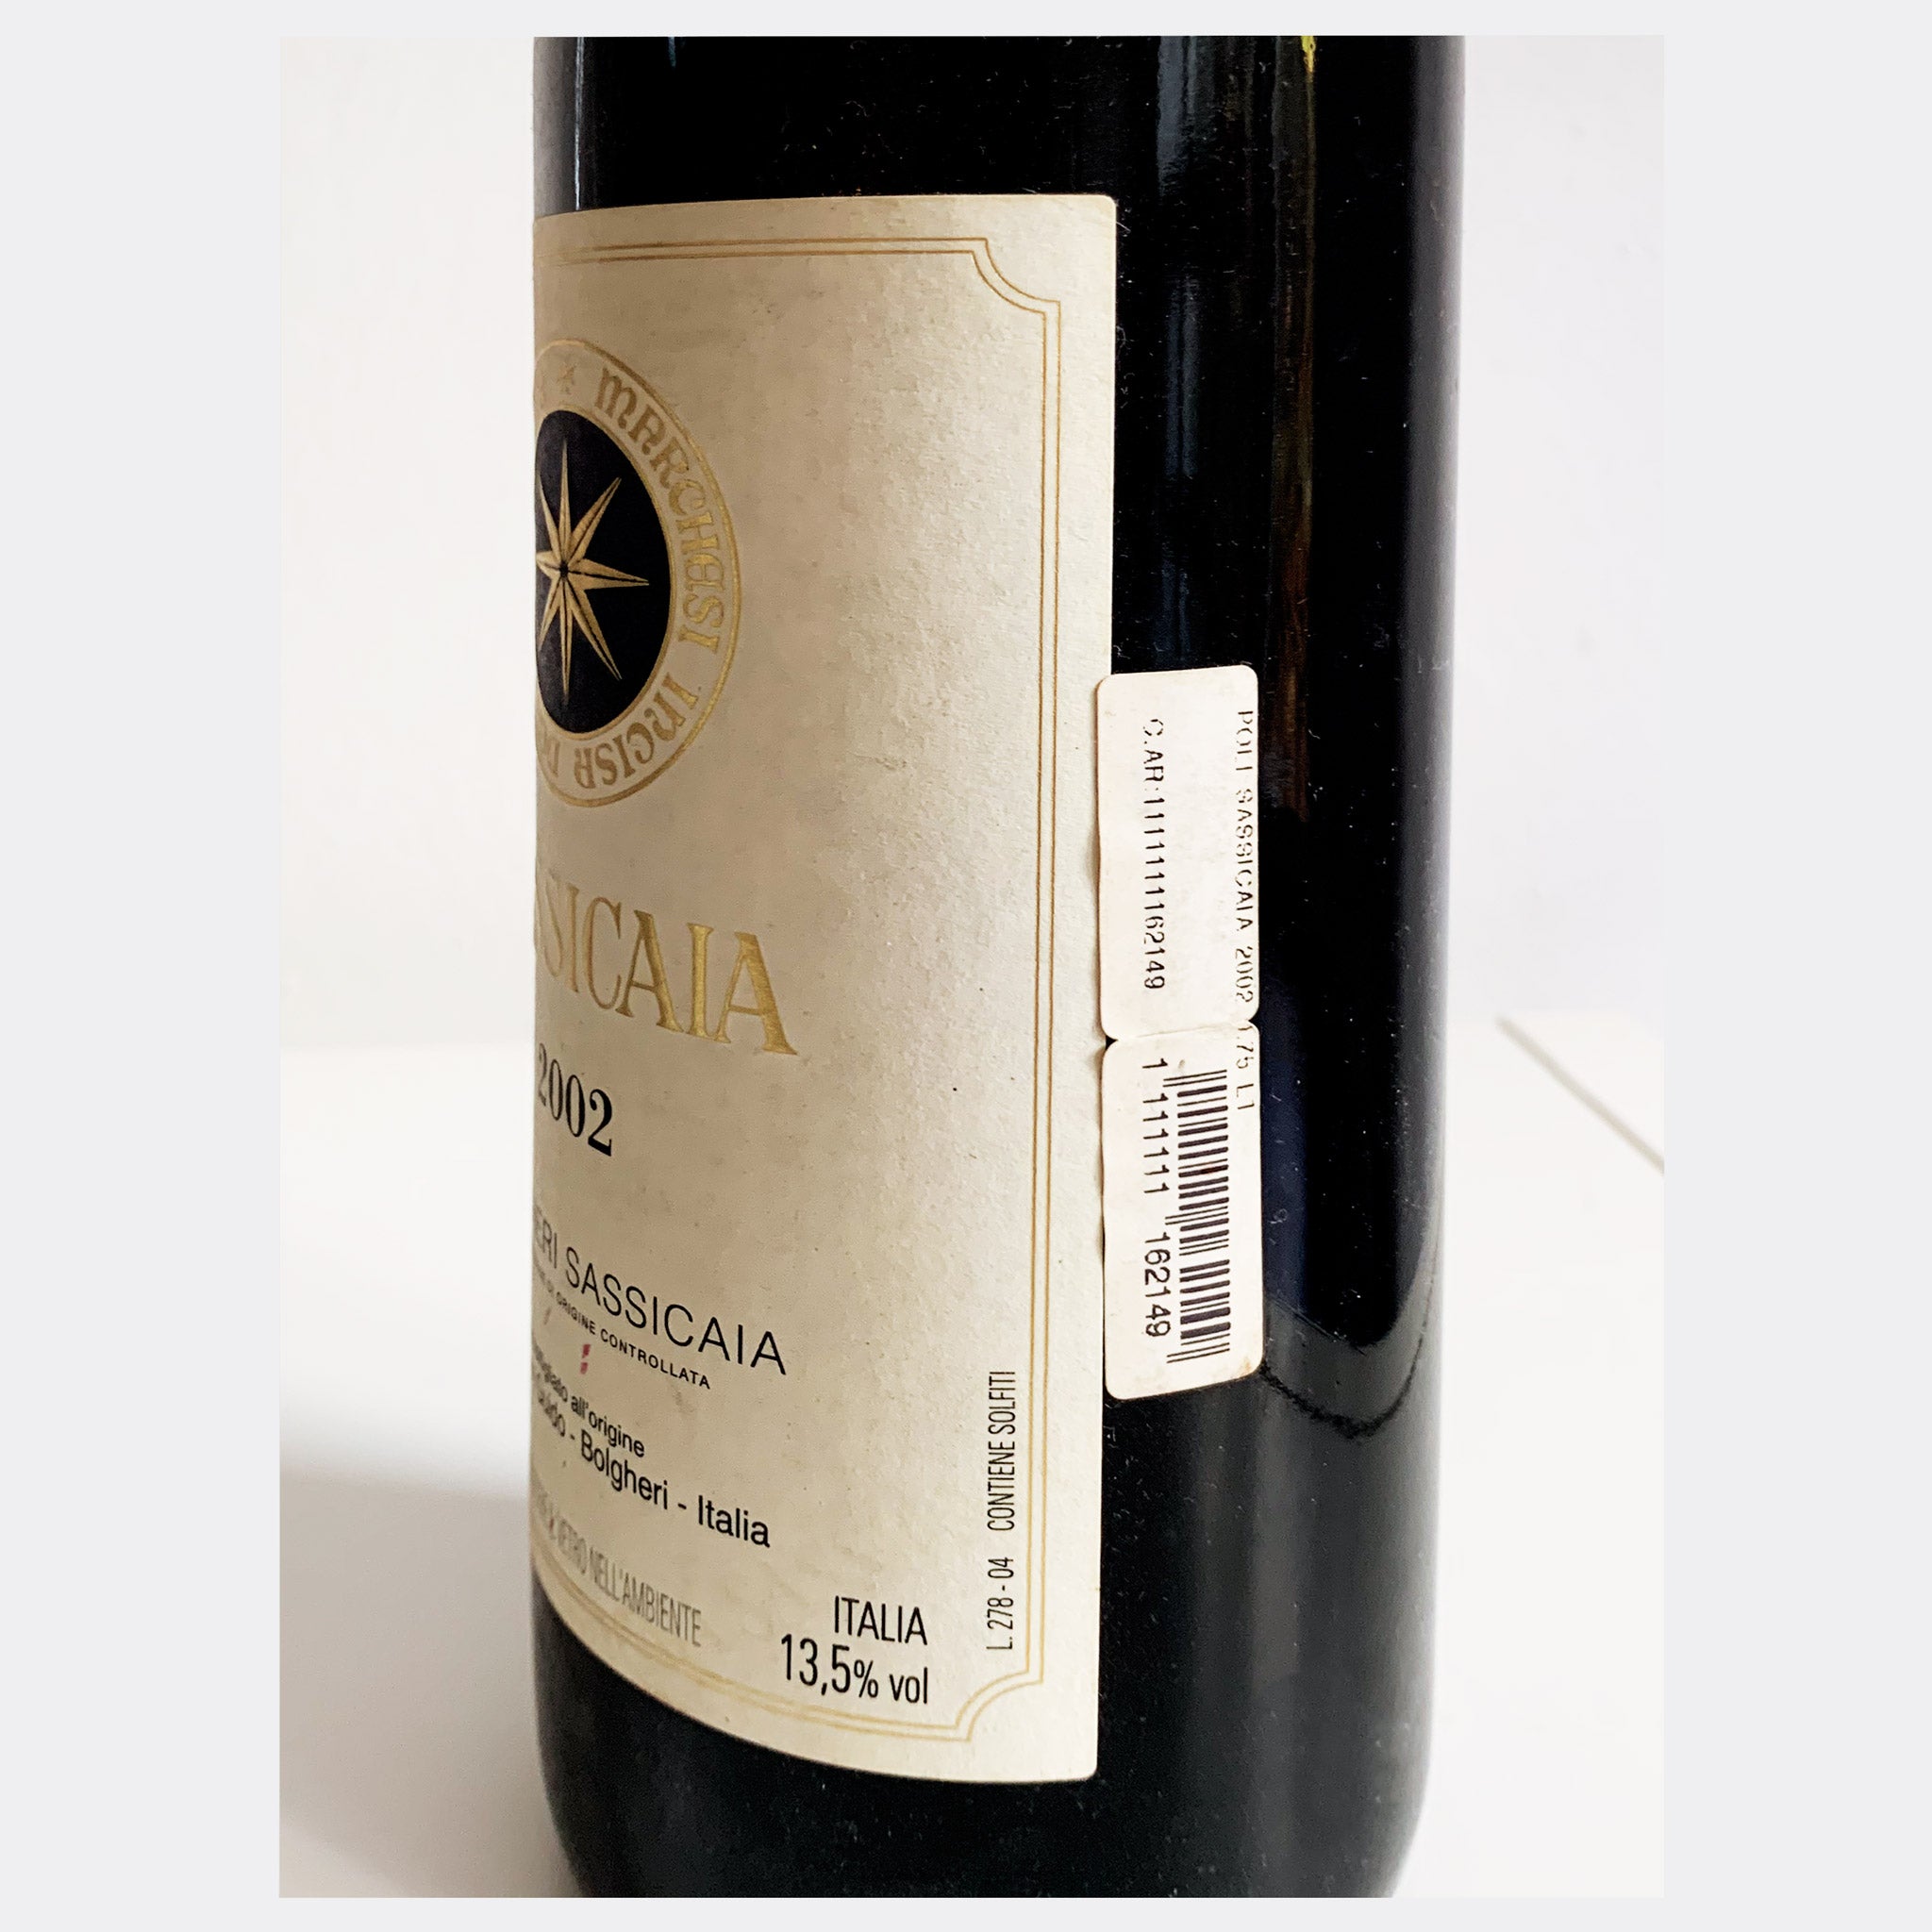 SASSICAIA BOLGHERI DOC | Tenuta San Guido | 2001 & 2002 | Two perfect out-of-stock bottles